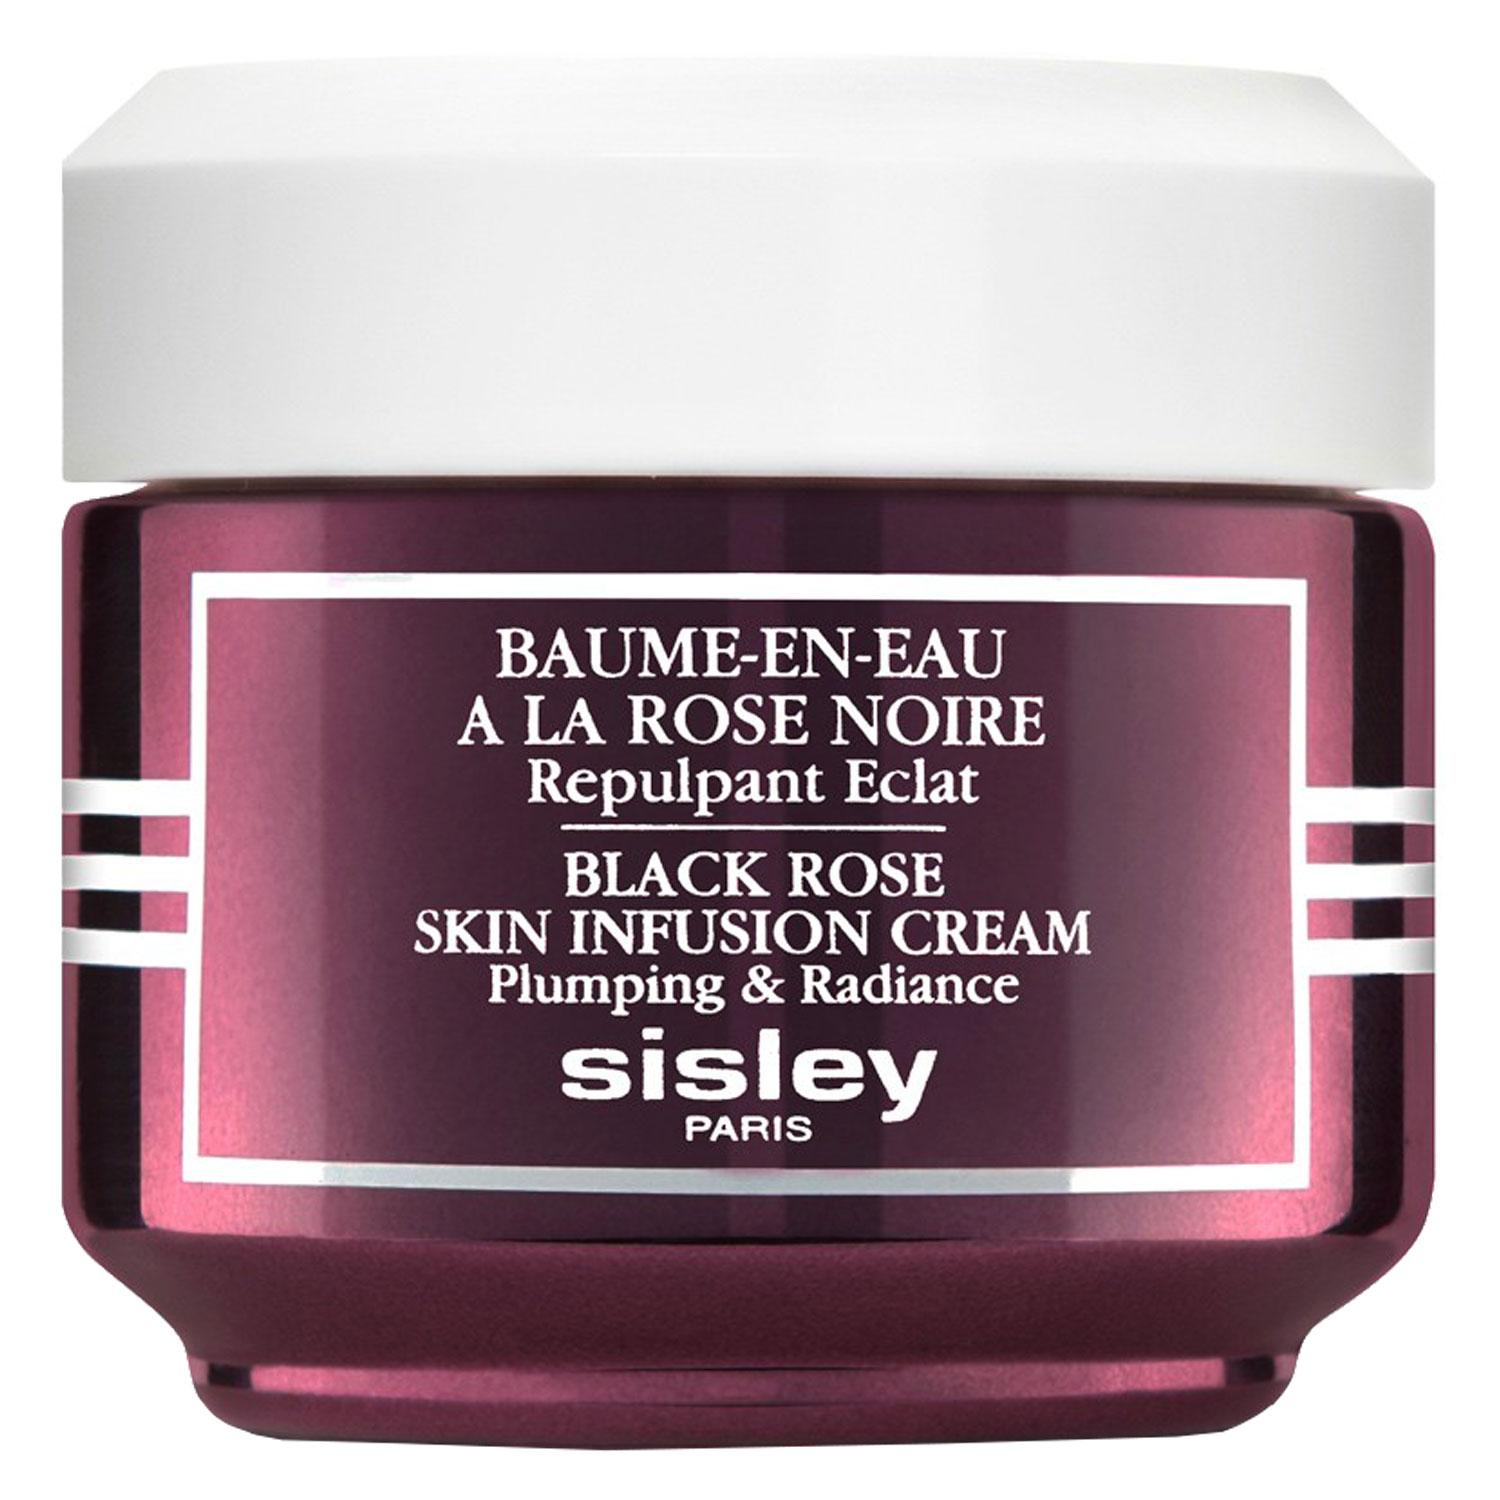 Rose Noire - Black Rose Skin Infusion Cream